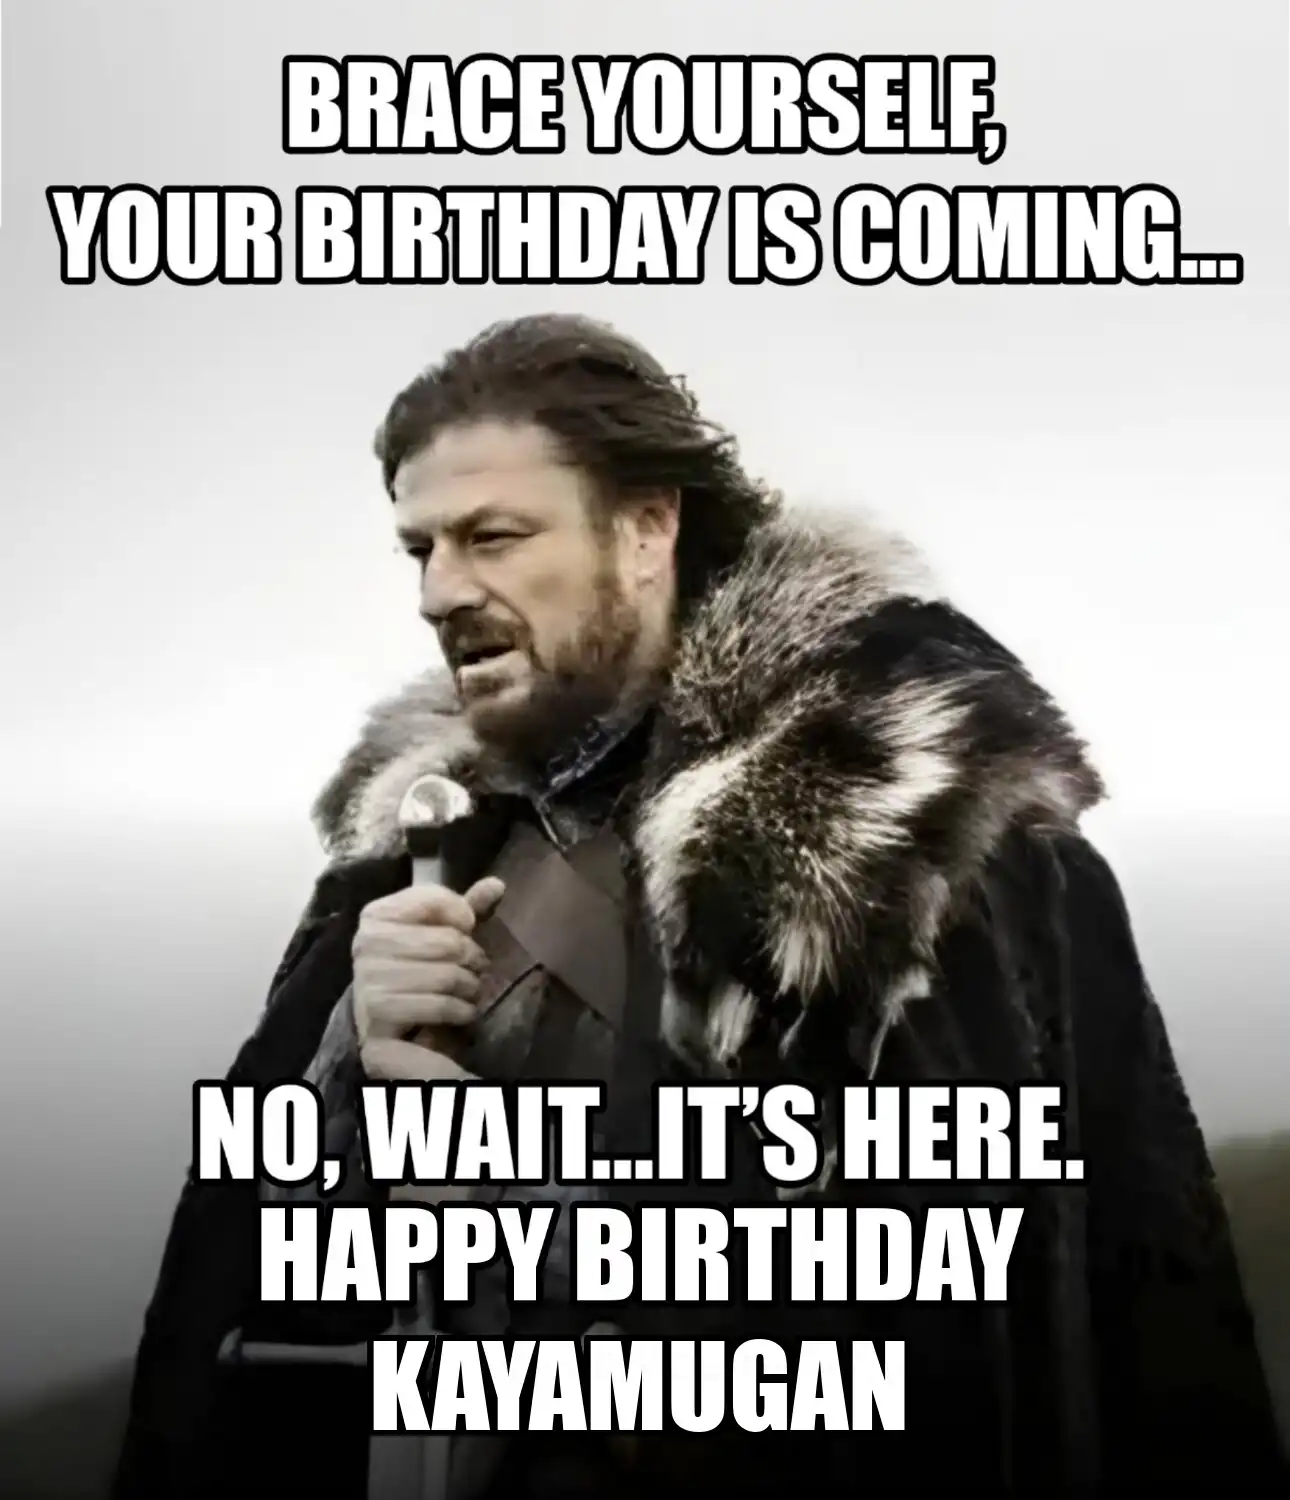 Happy Birthday Kayamugan Brace Yourself Your Birthday Is Coming Meme